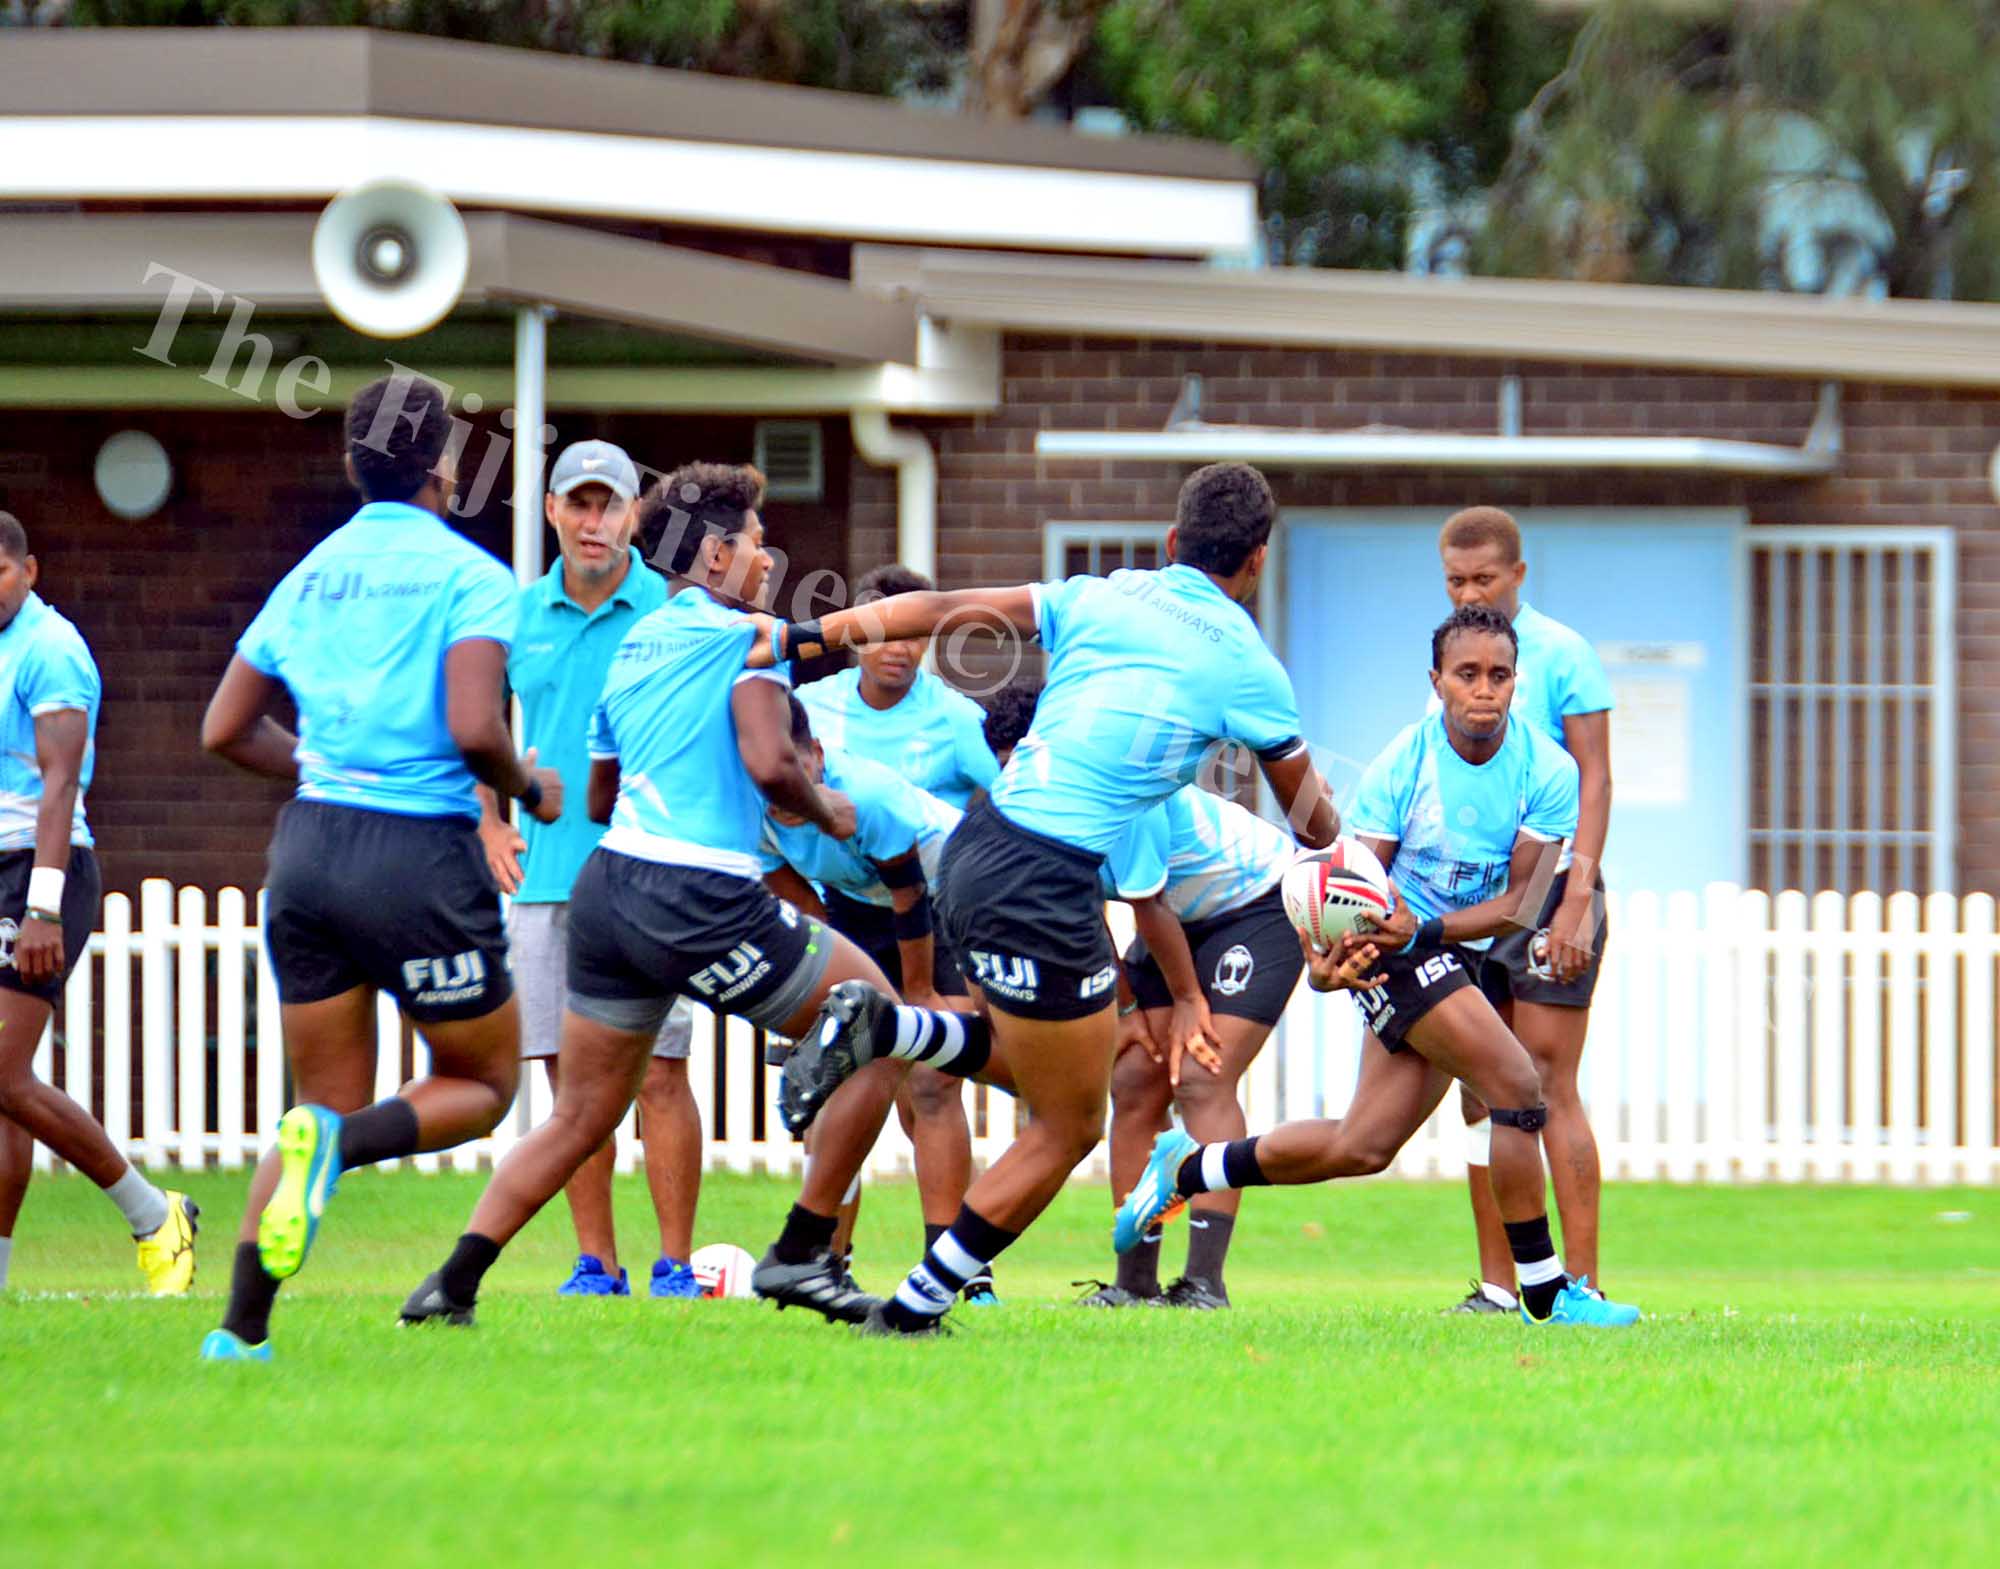 Timaima Ravisa on attack during the Fiji Airways Fijiana team training at the Mascot Oval ground in Sydney, Australia on Thursday, January 25, 2018. Picture: JONACANI LALAKOBAU